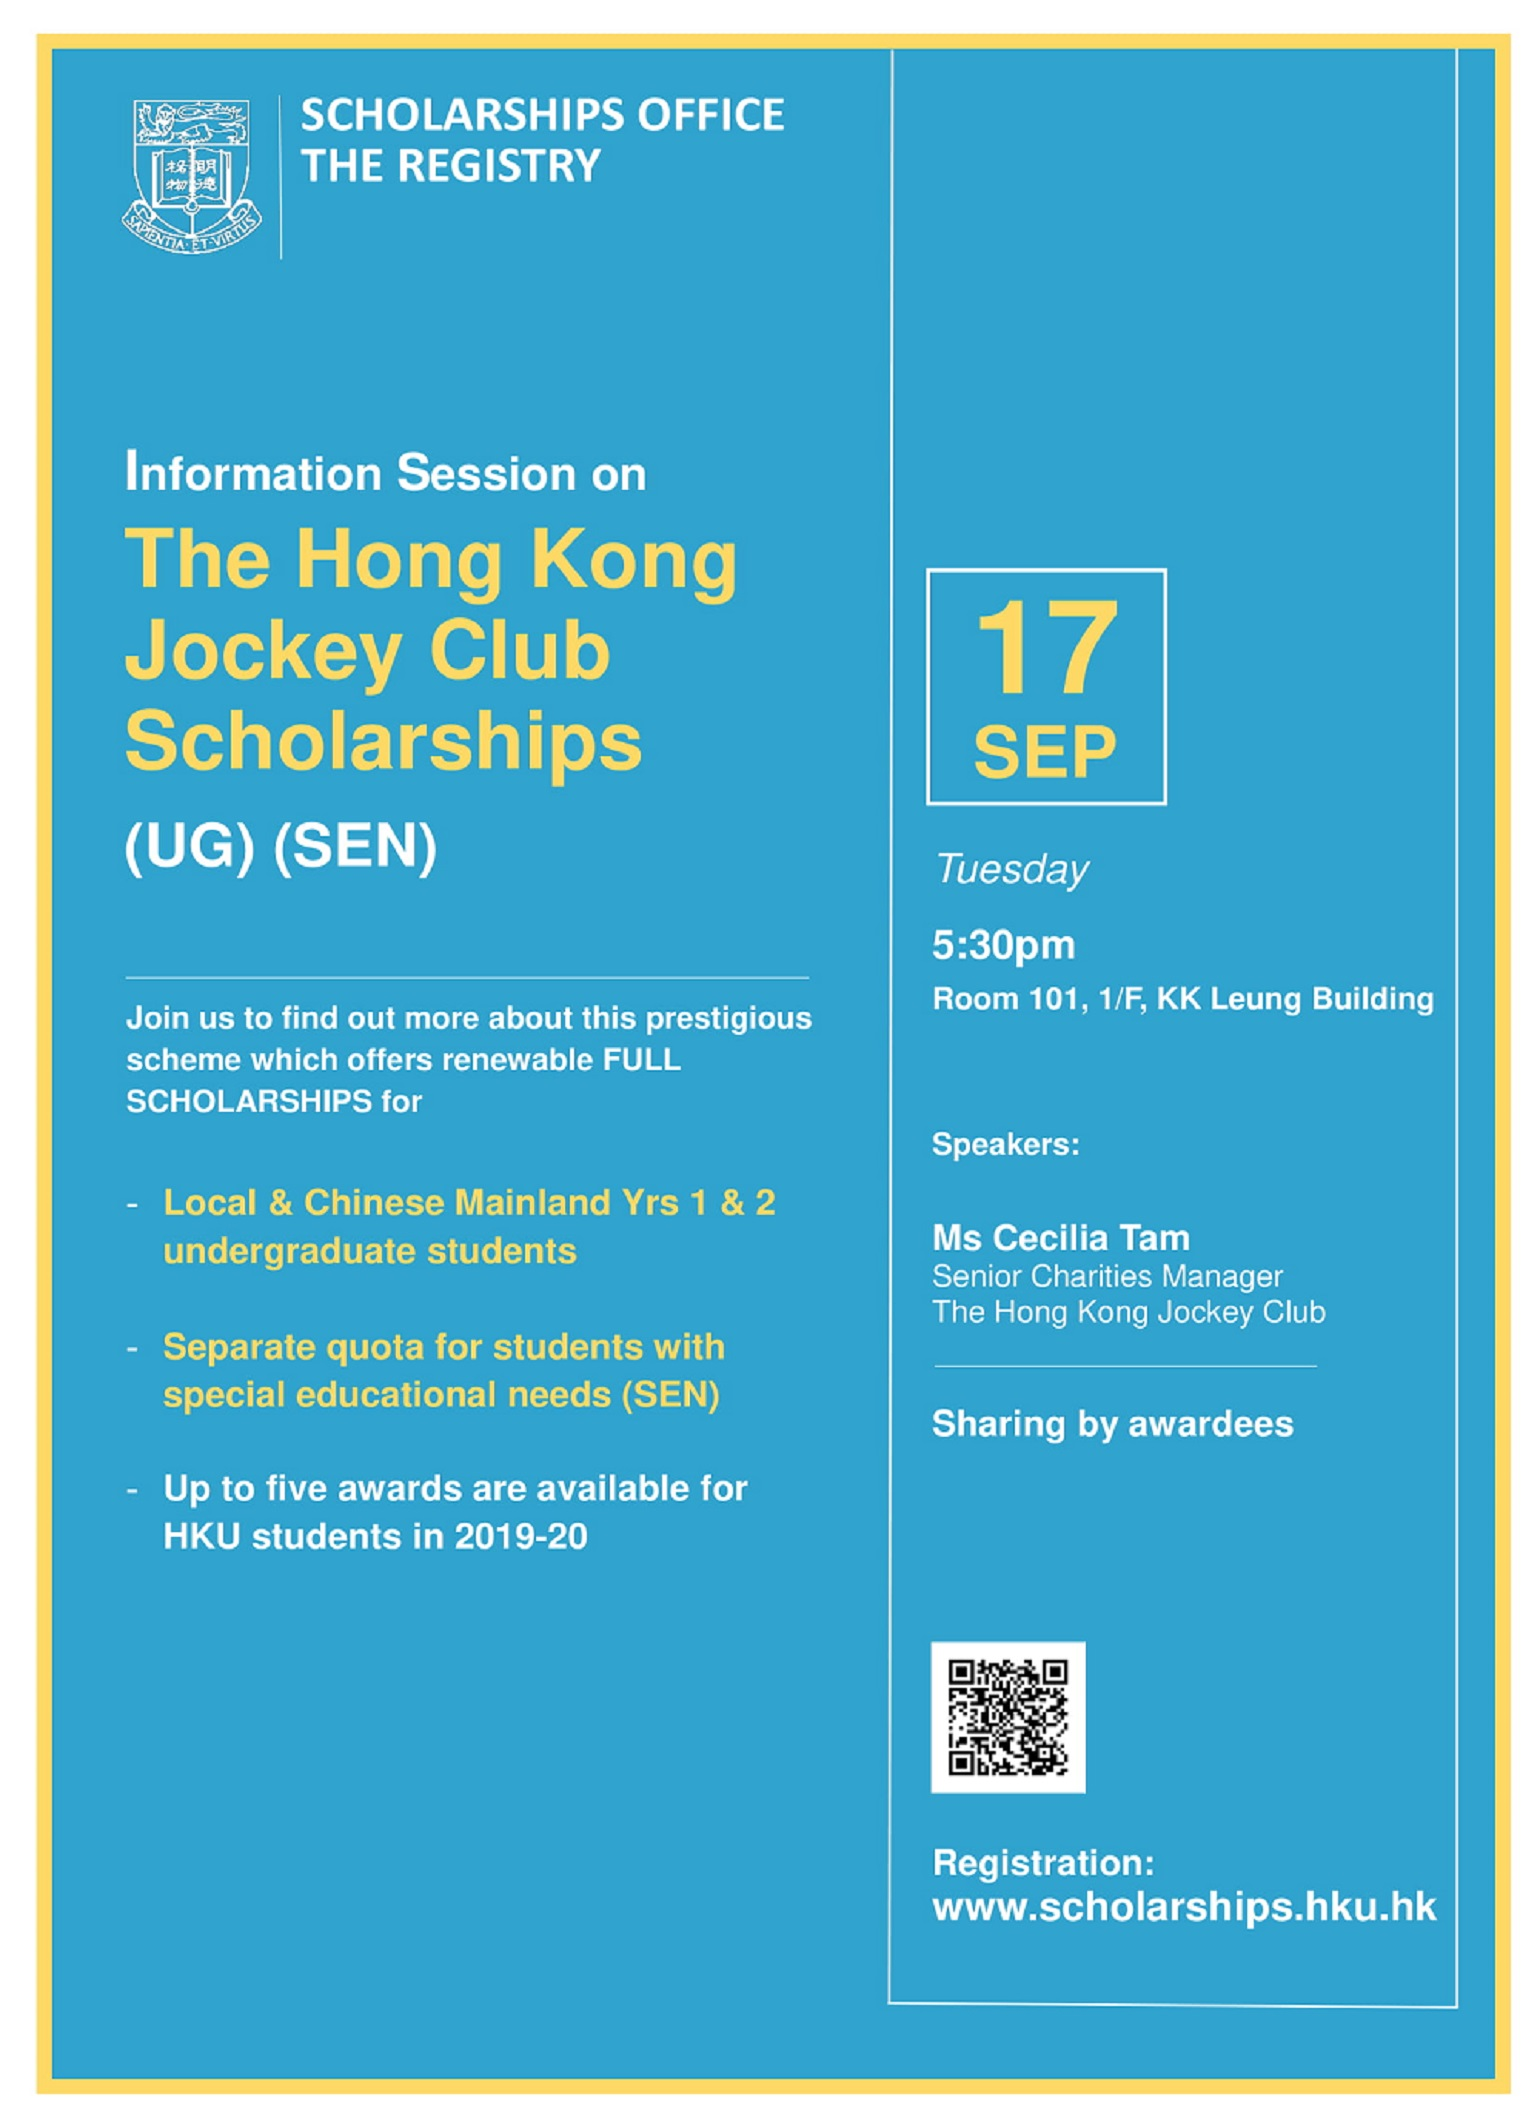 HK Jockey Club UG Scholarships - Information Session